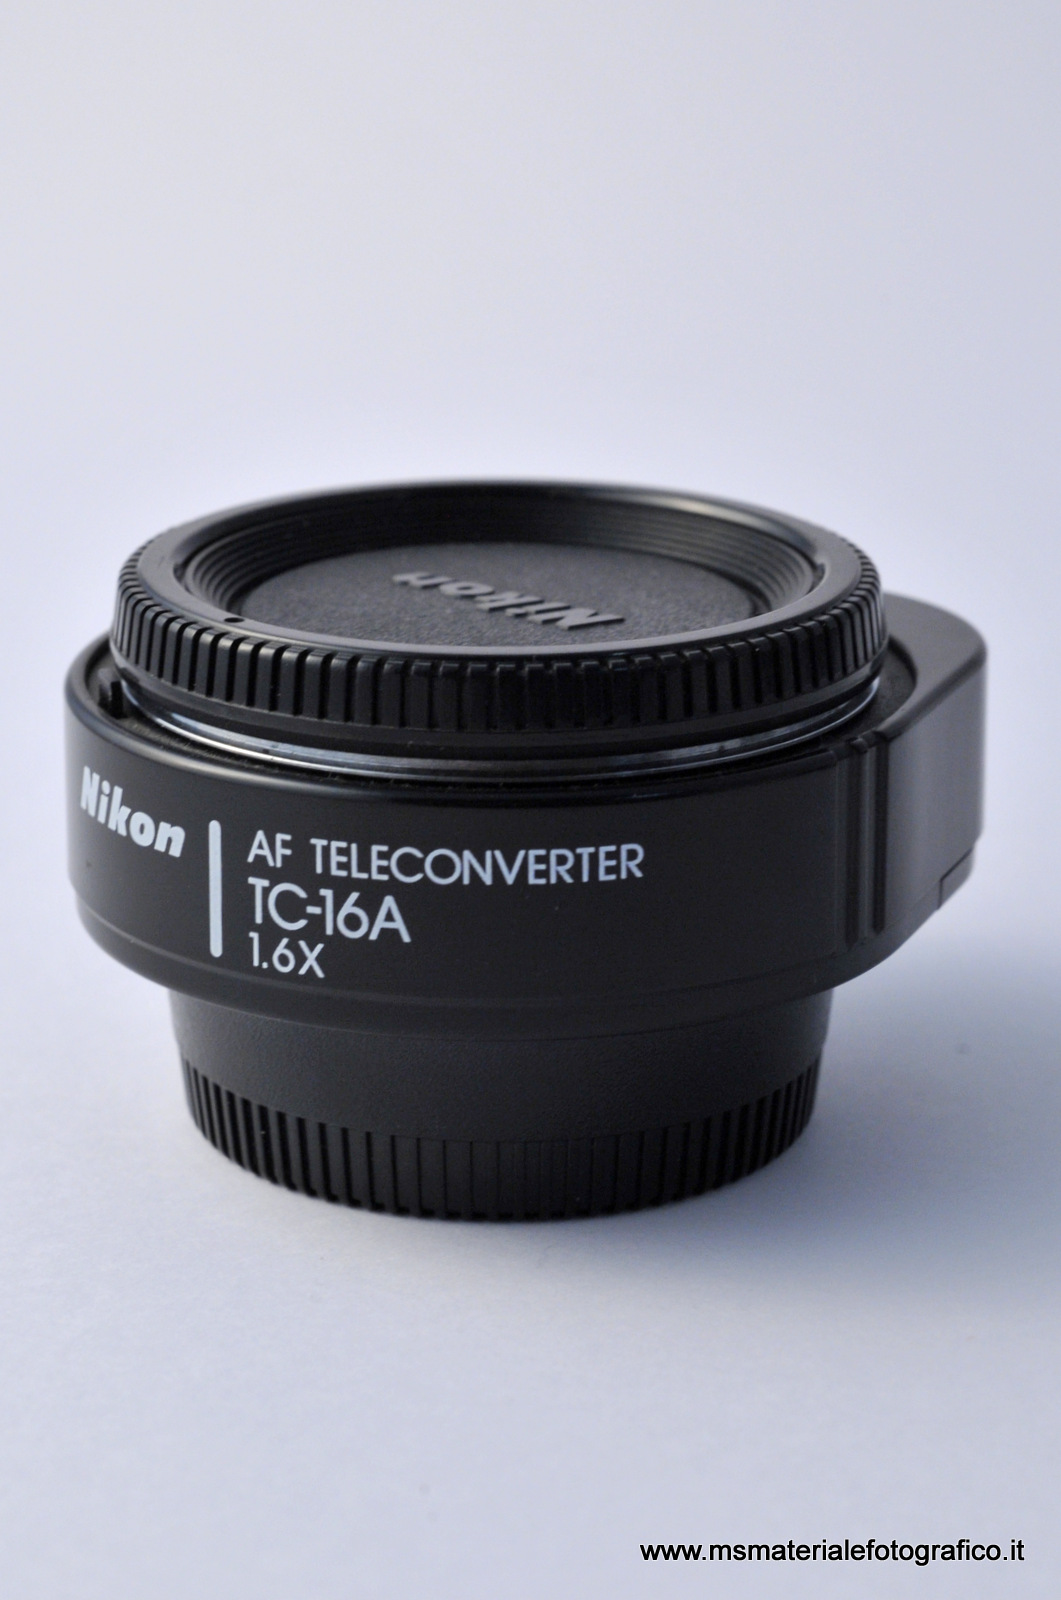 Nikon AF Teleconverter TC-16A 1.6x - M&S Materiale Fotografico